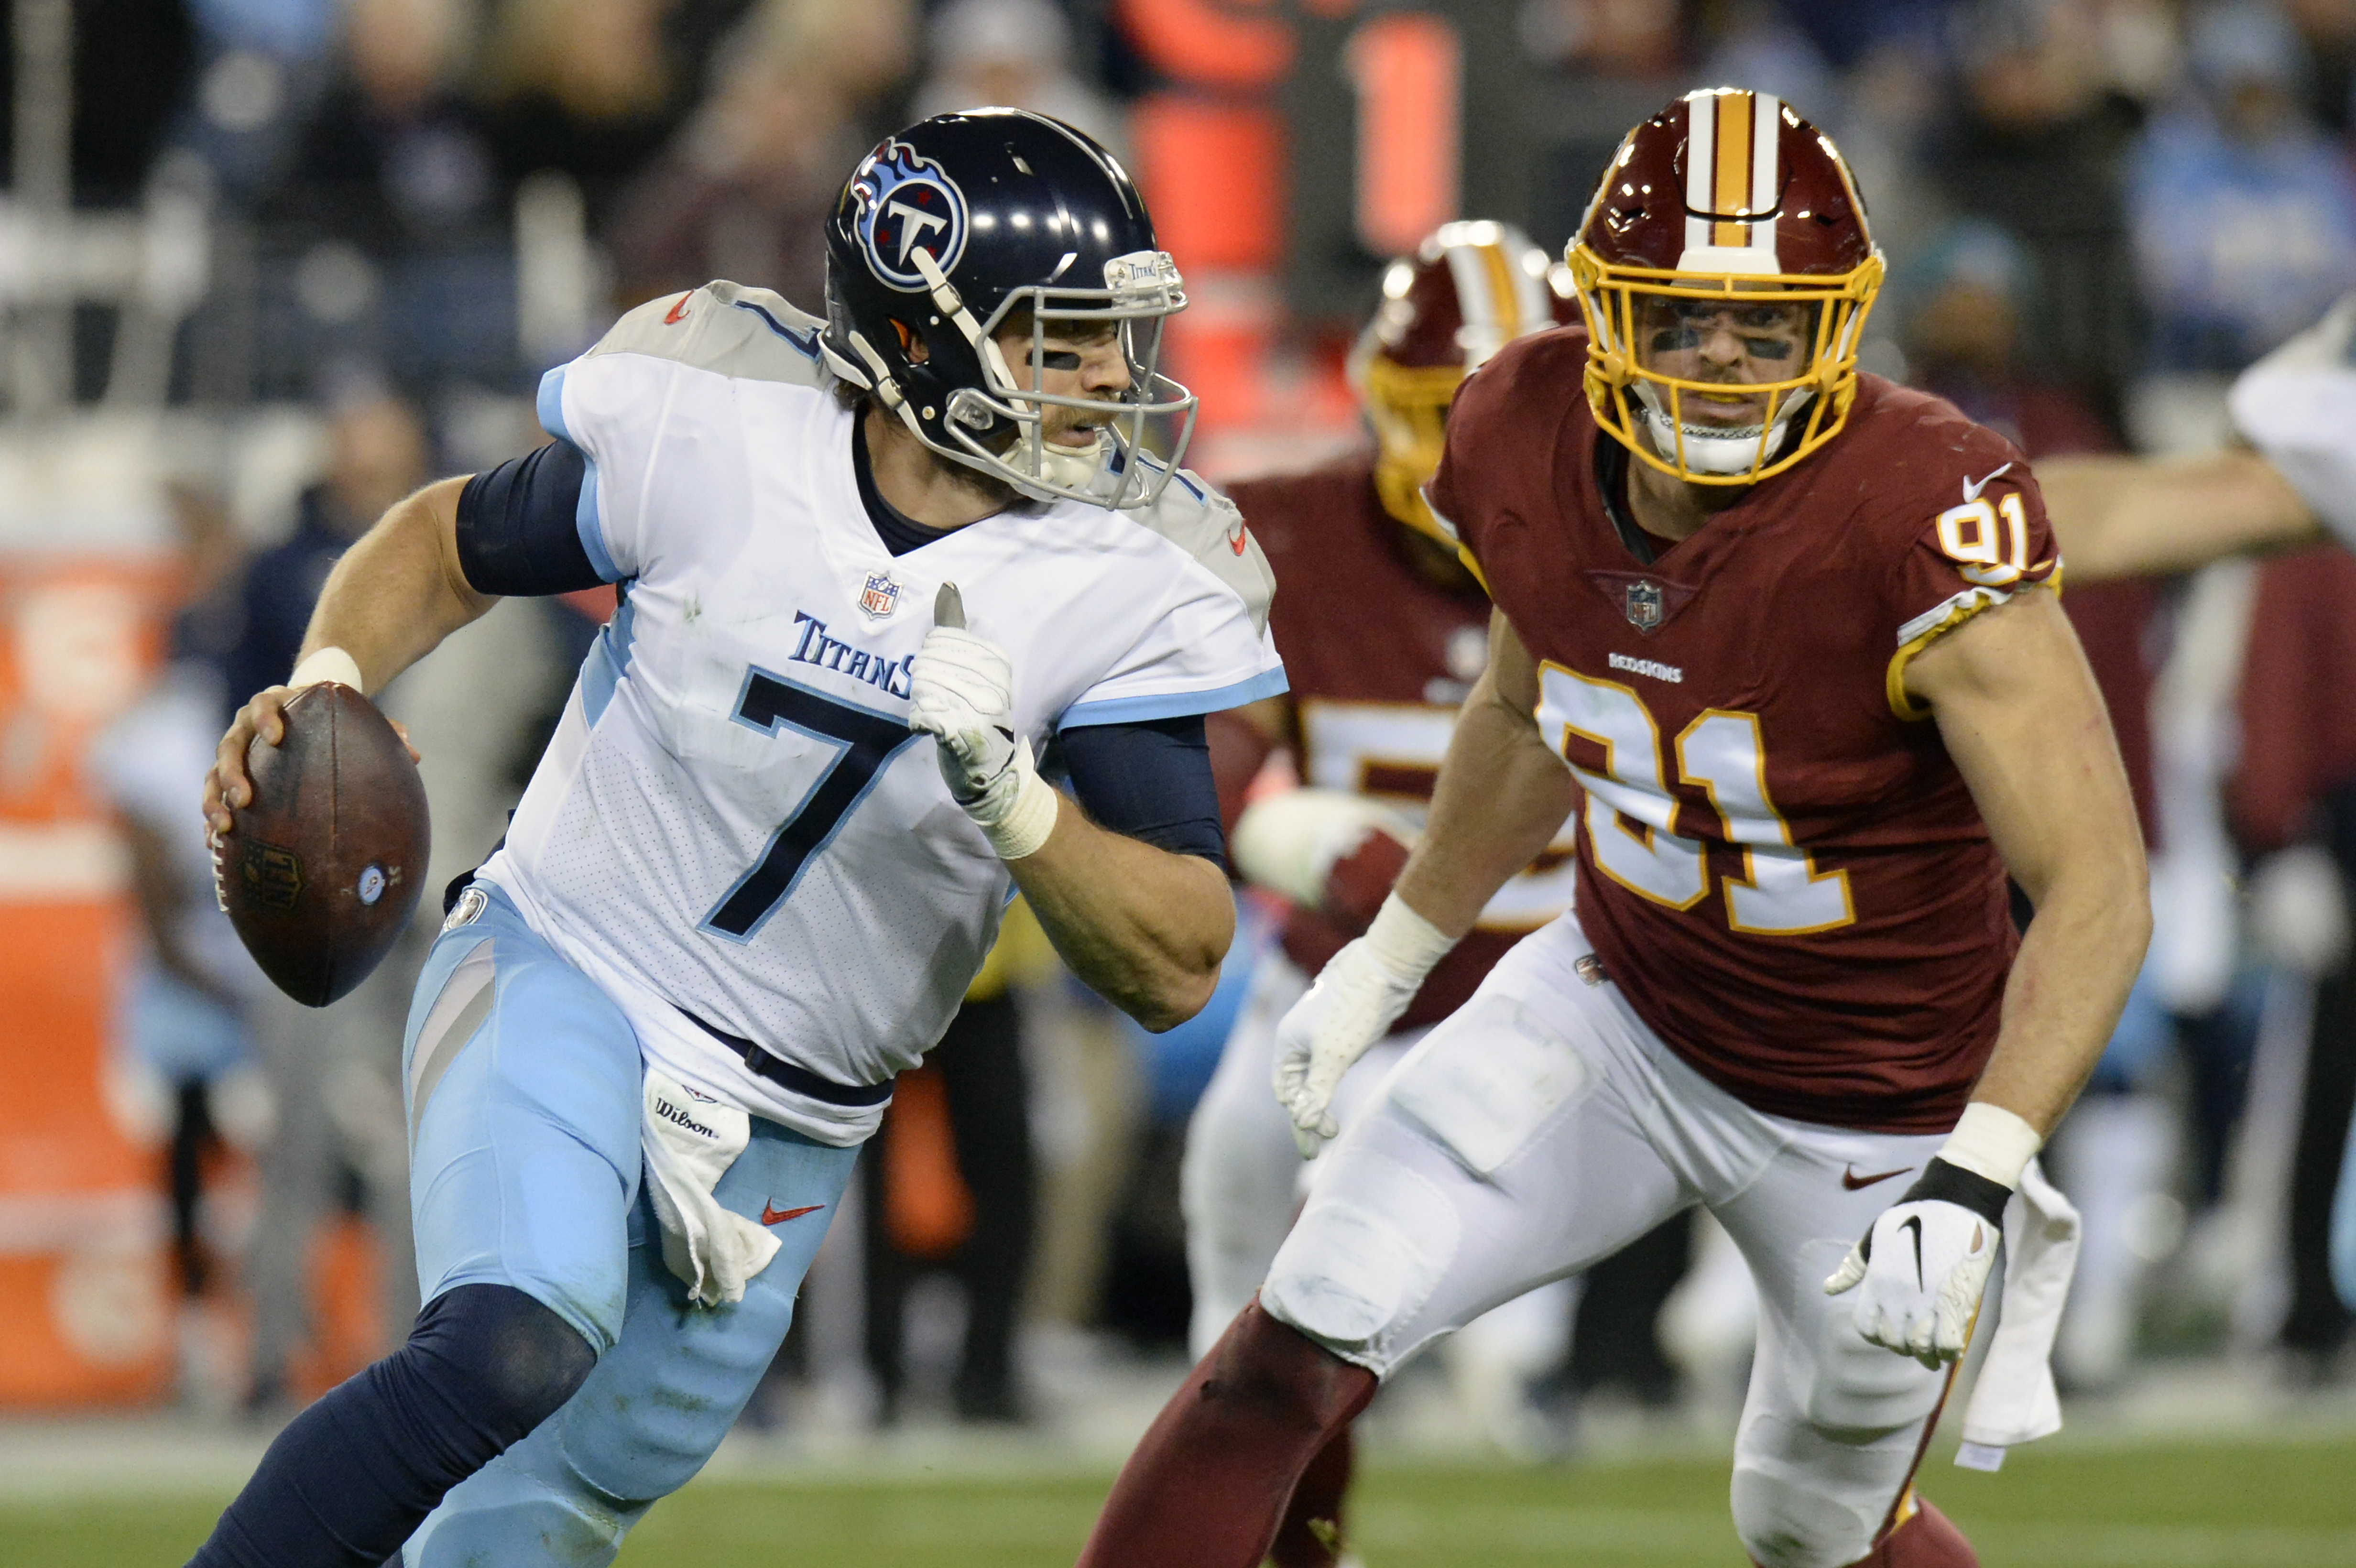 Blaine Gabbert keeps Titans' hopes alive, beating Redskins